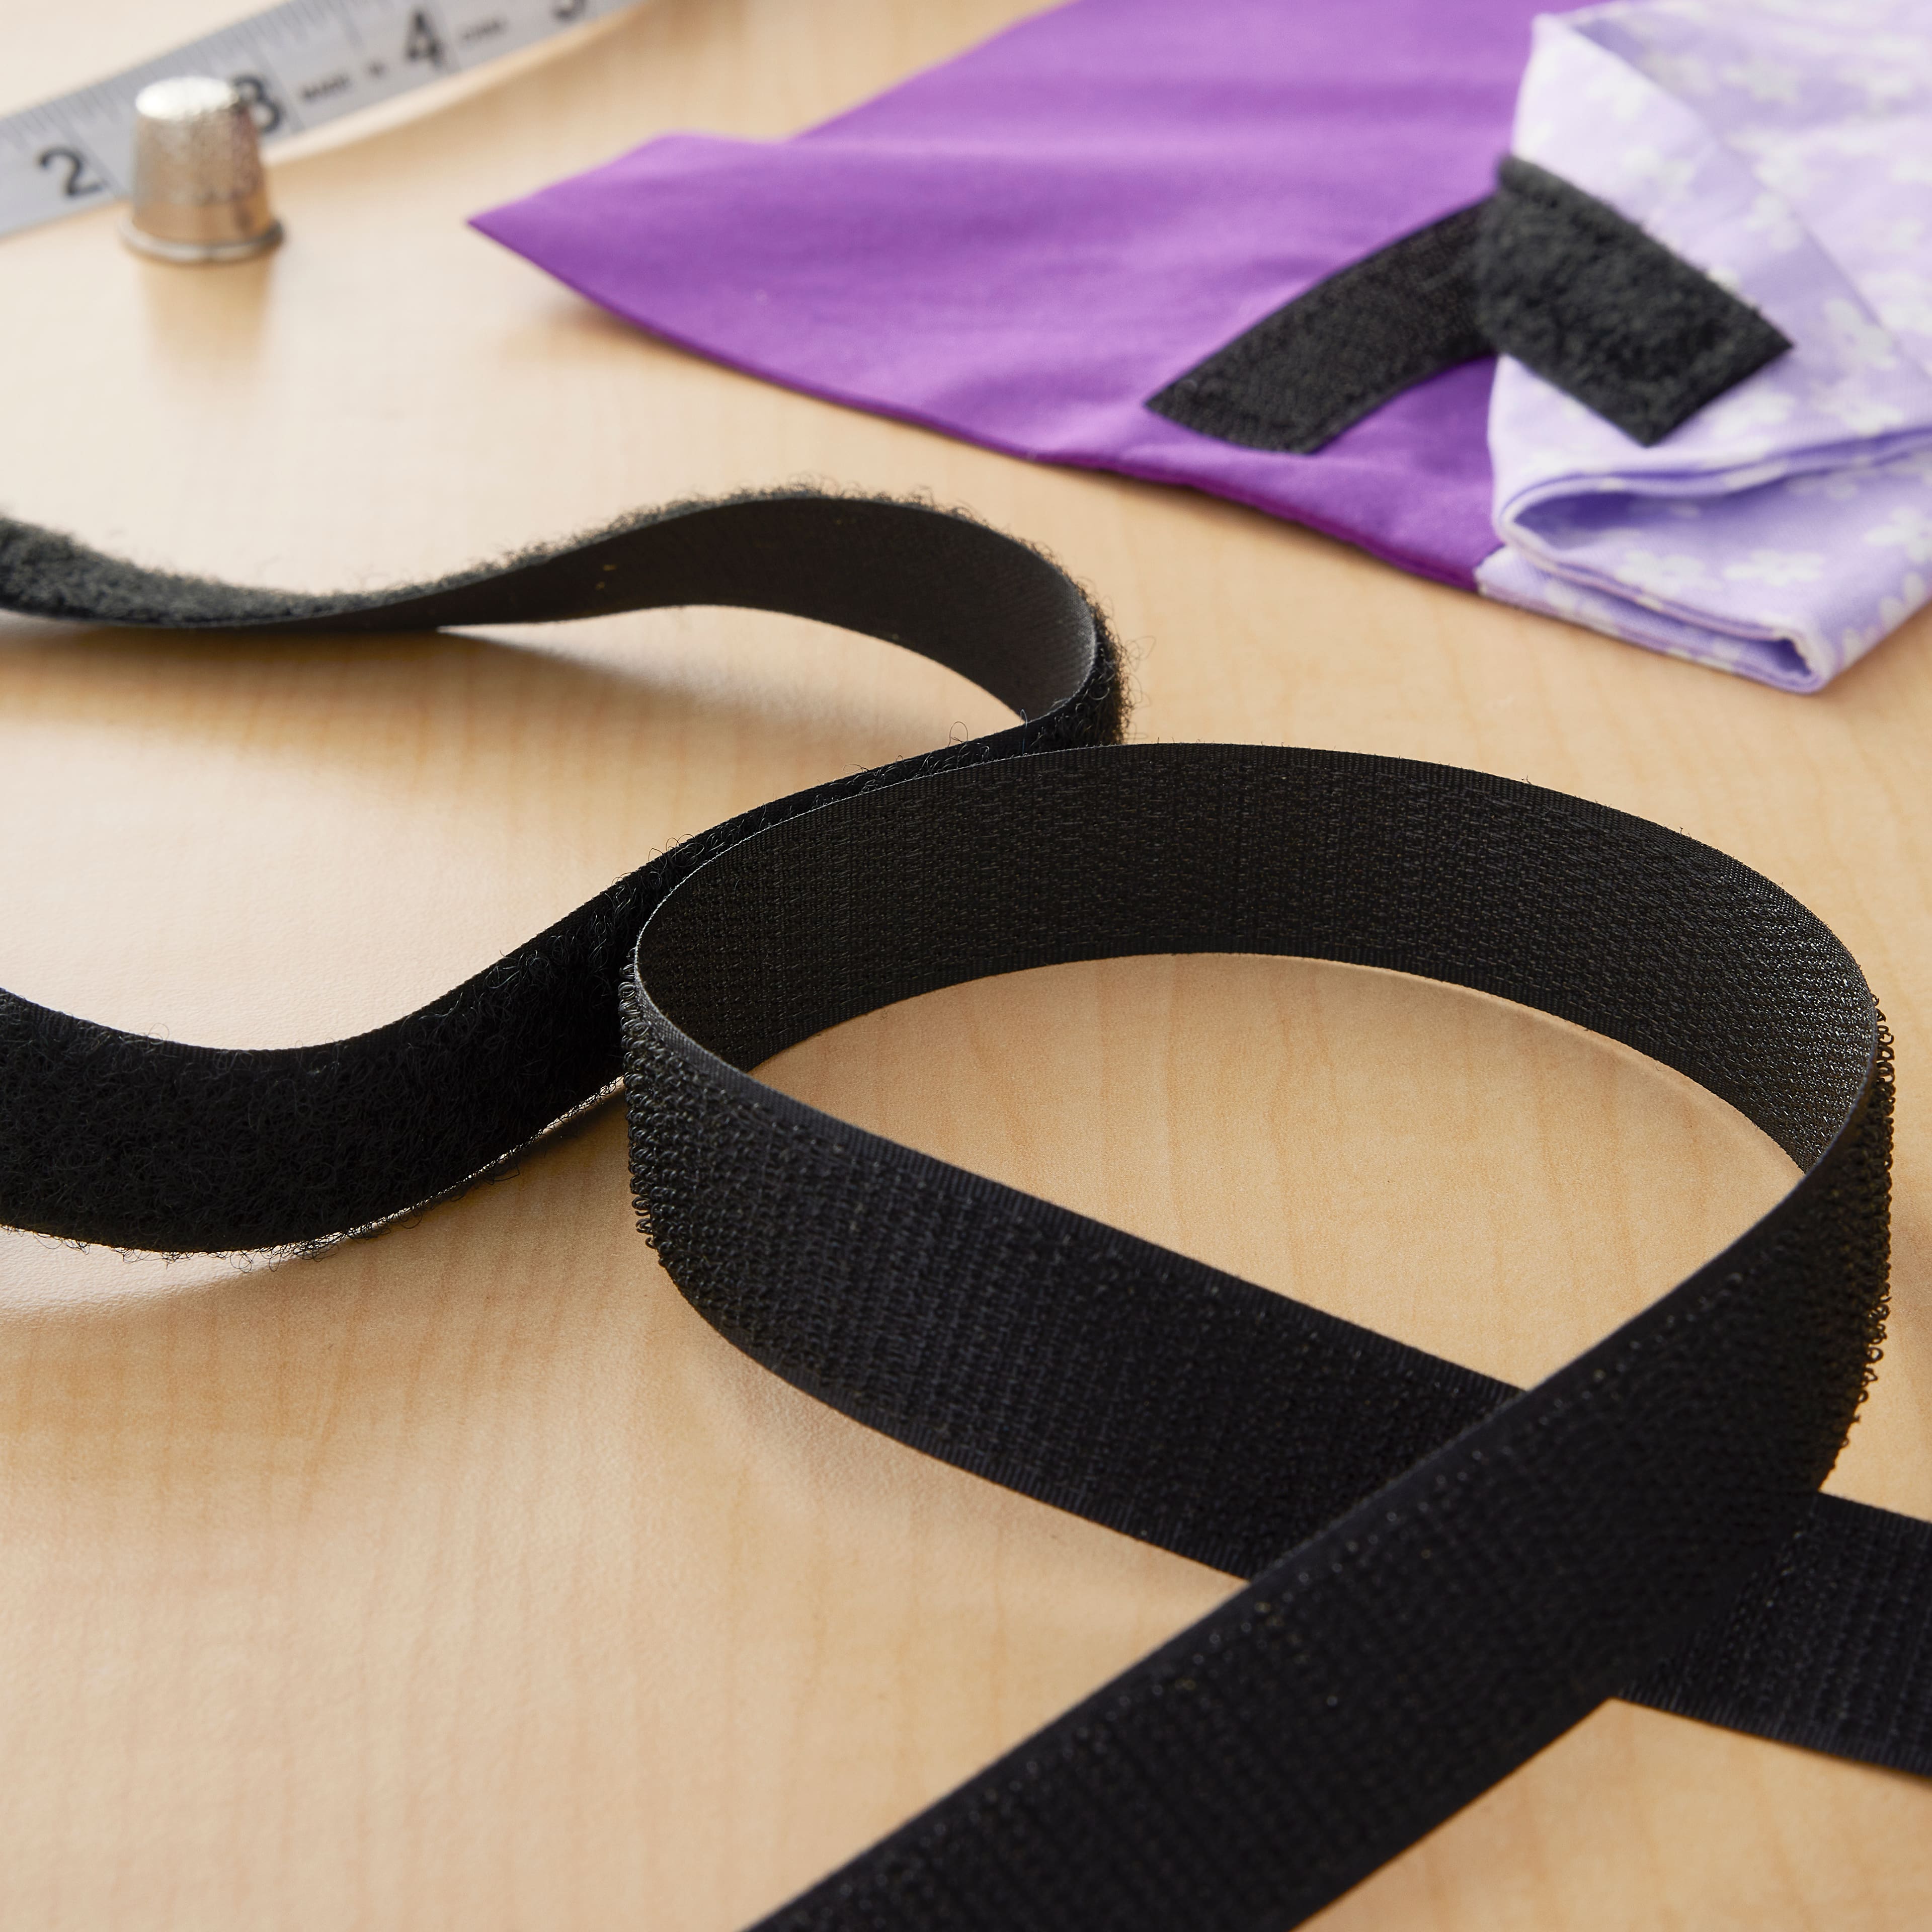 VELCRO® Brand Black Sew-On Tape Strip, 0.75 x 30ft.